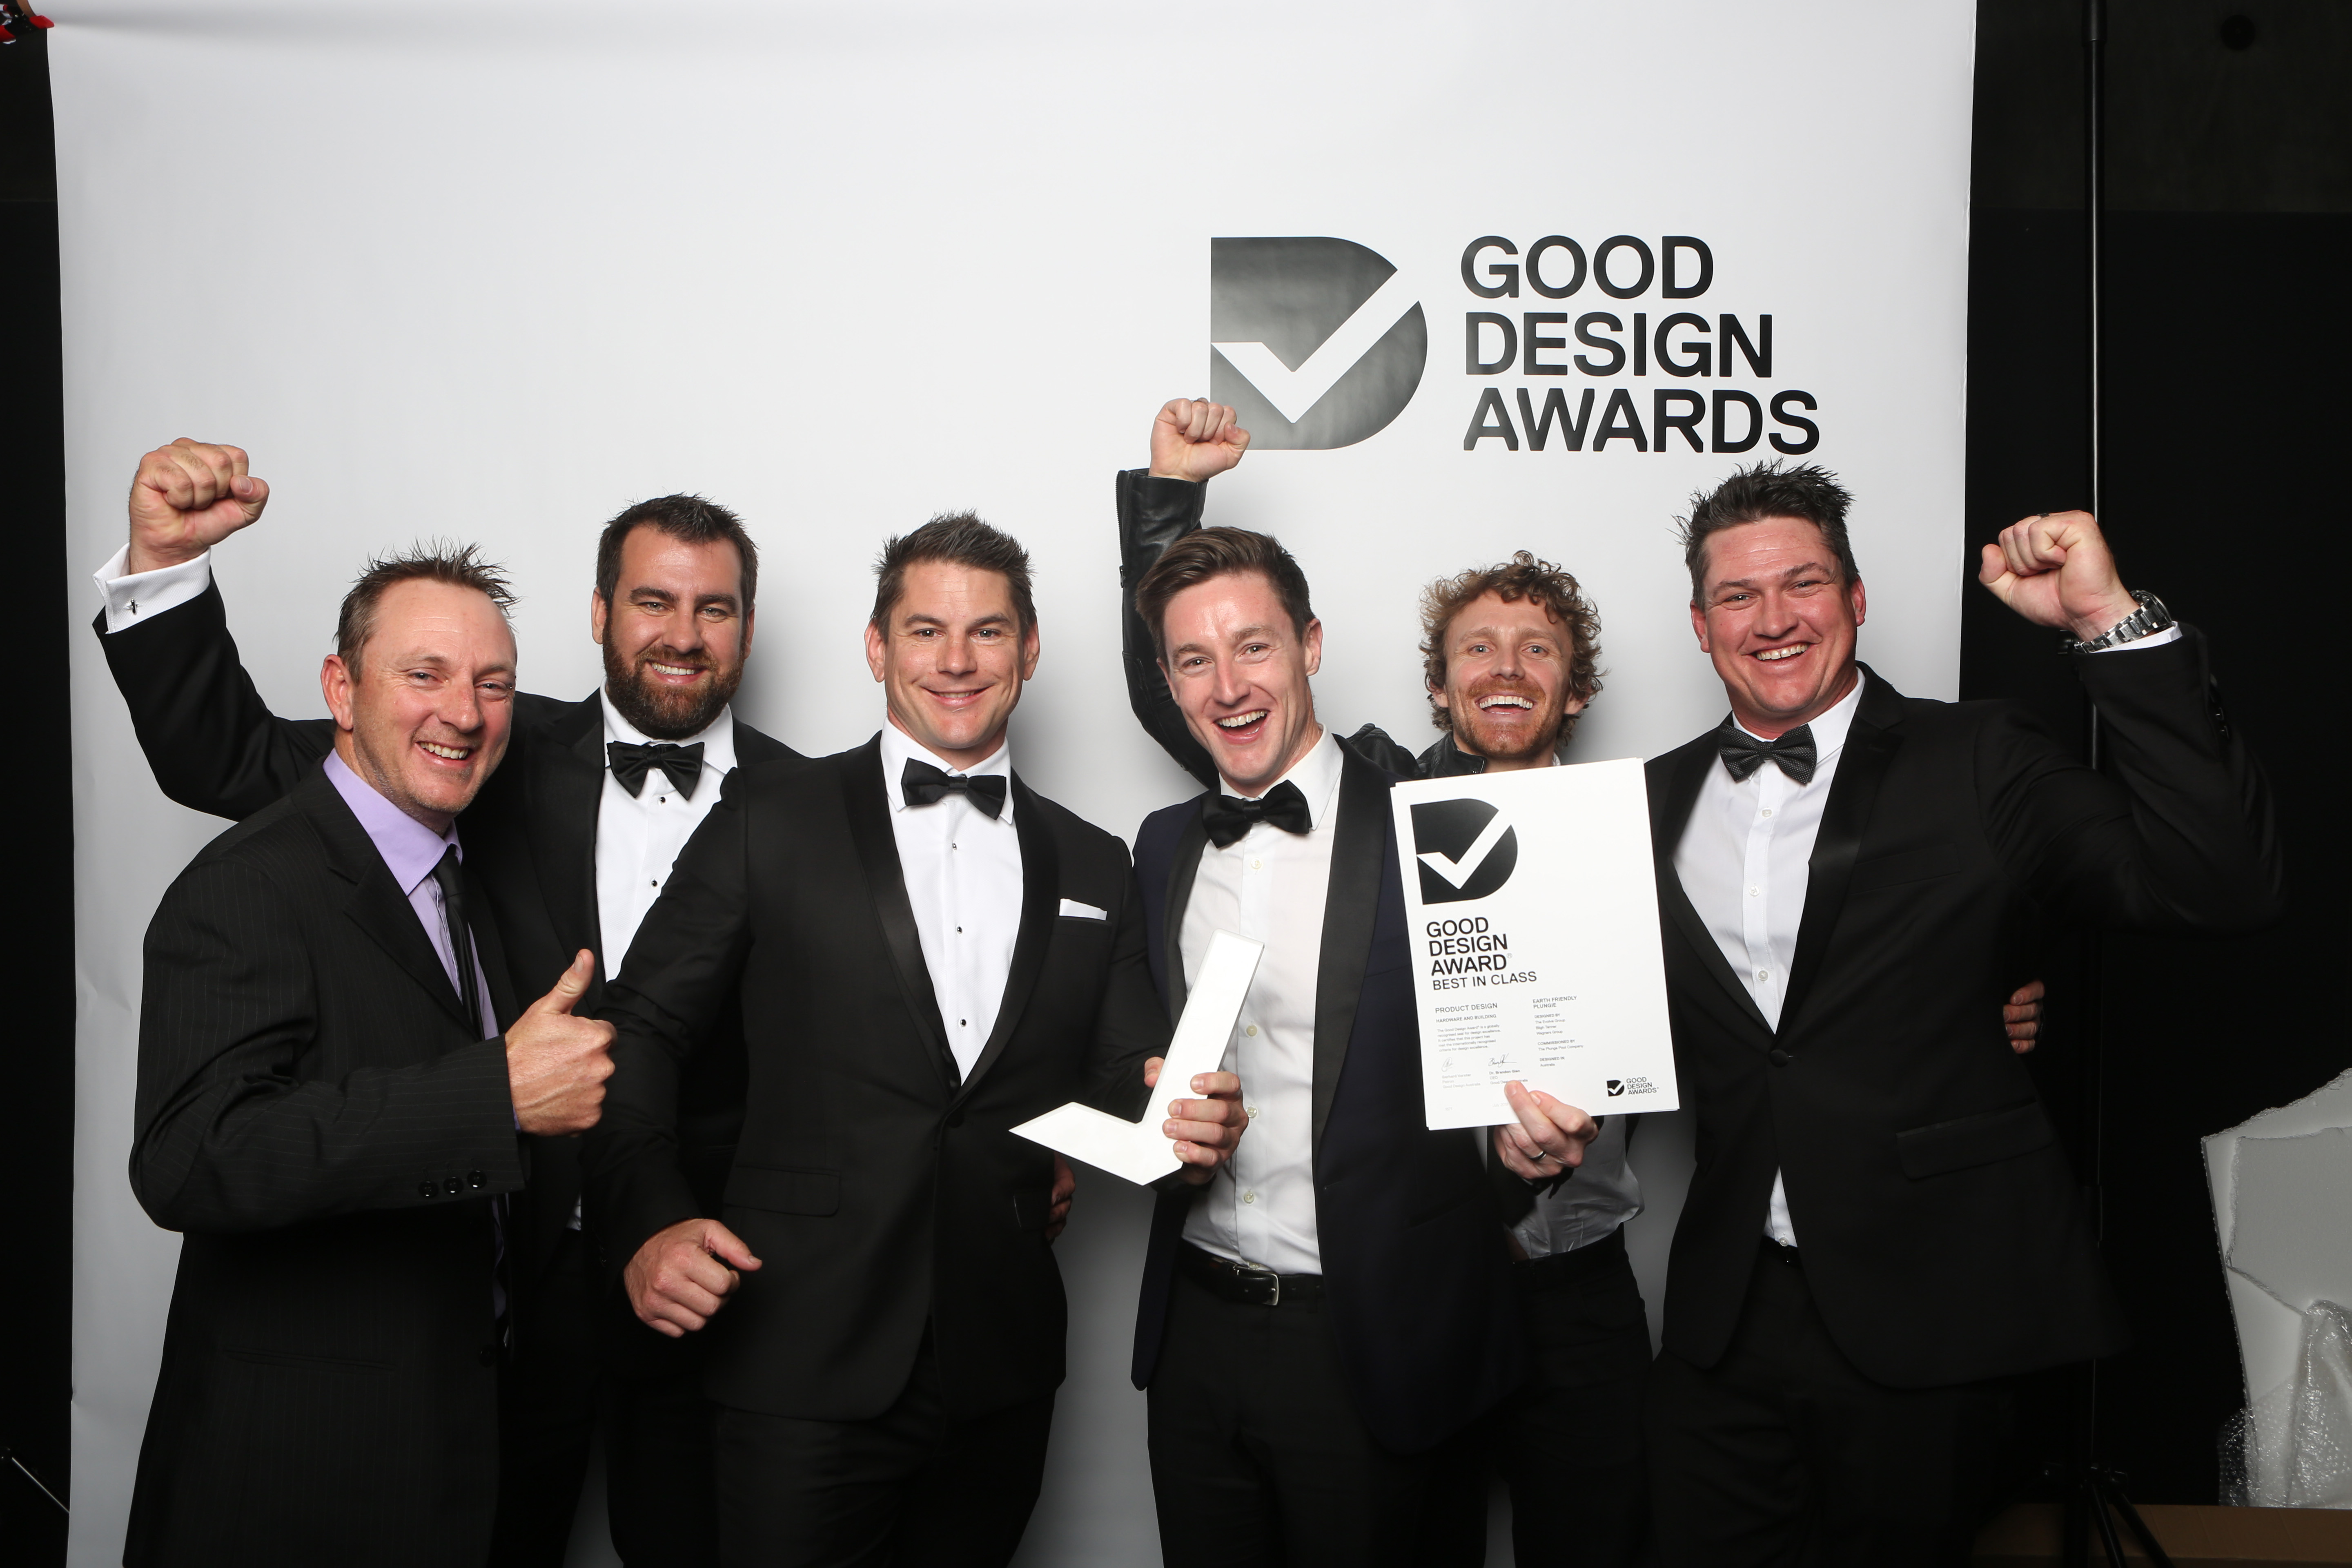 Six men from Plungie celebrates winning Australia's good design award